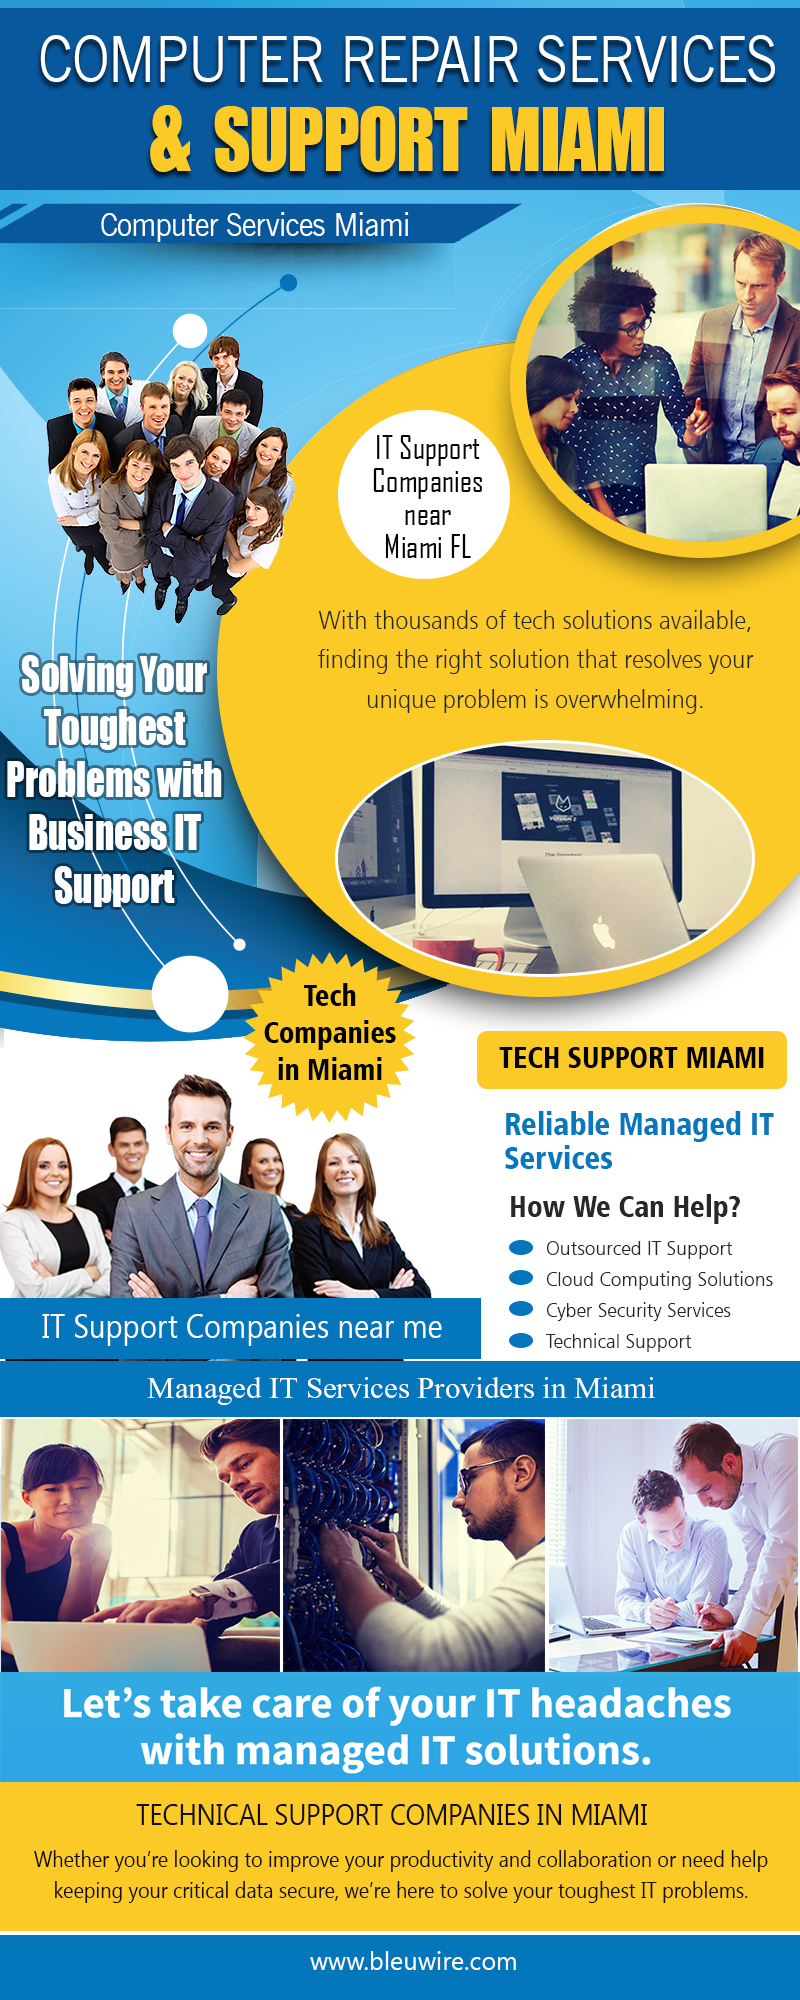 Repair support. Tech support. Computer service. Computer skills CV.